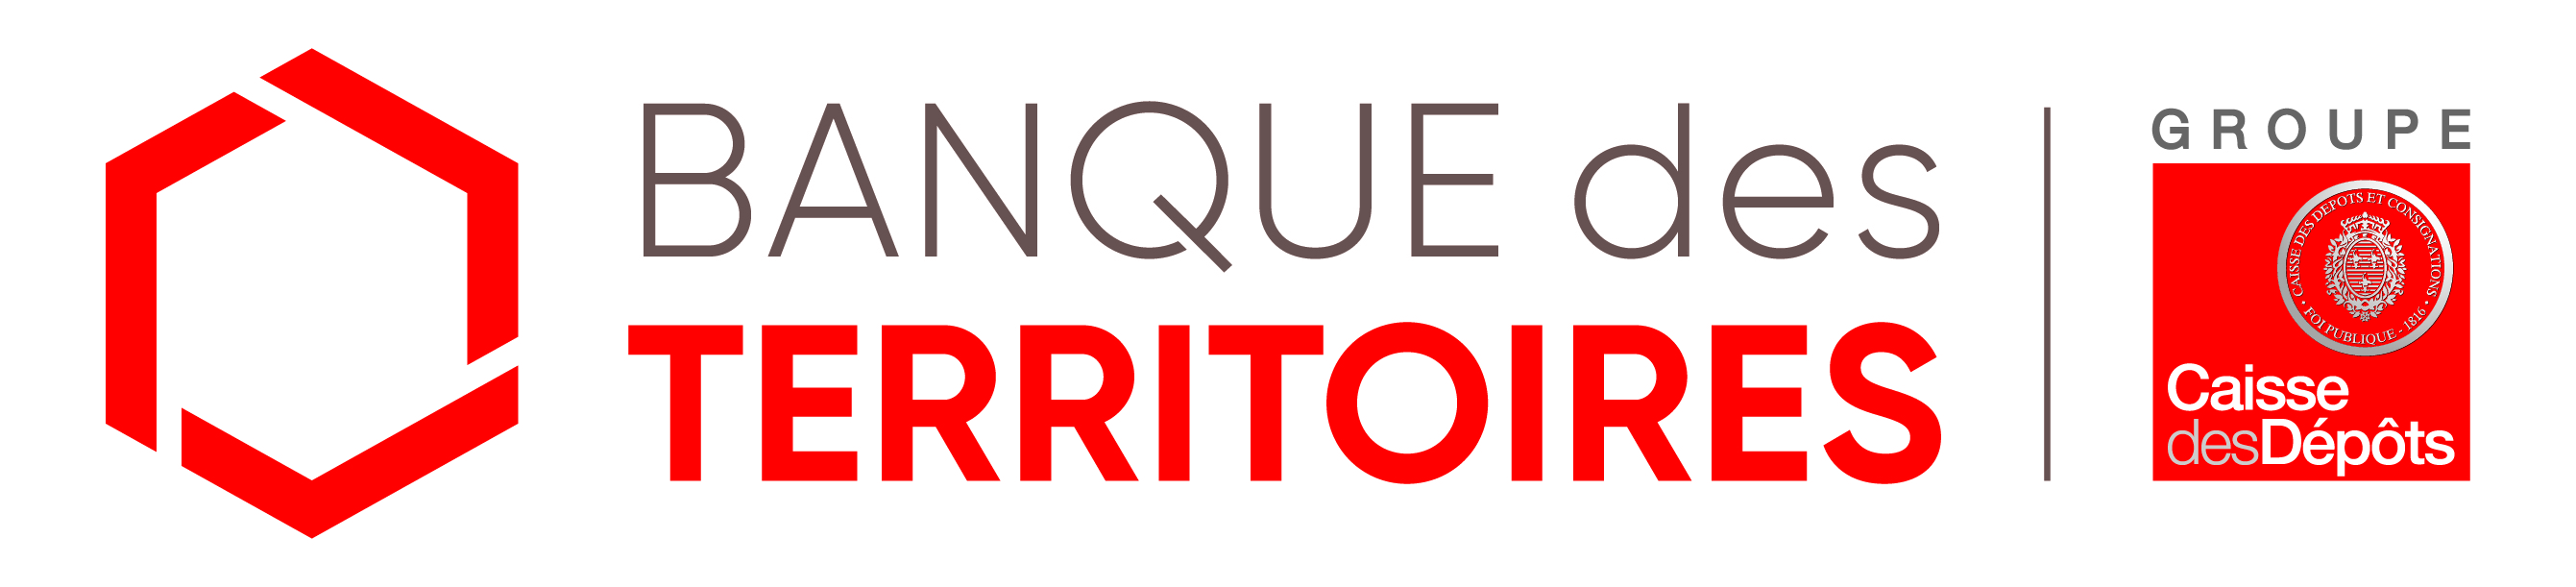 Logo_cdc_banque-territoire-2018.jpg